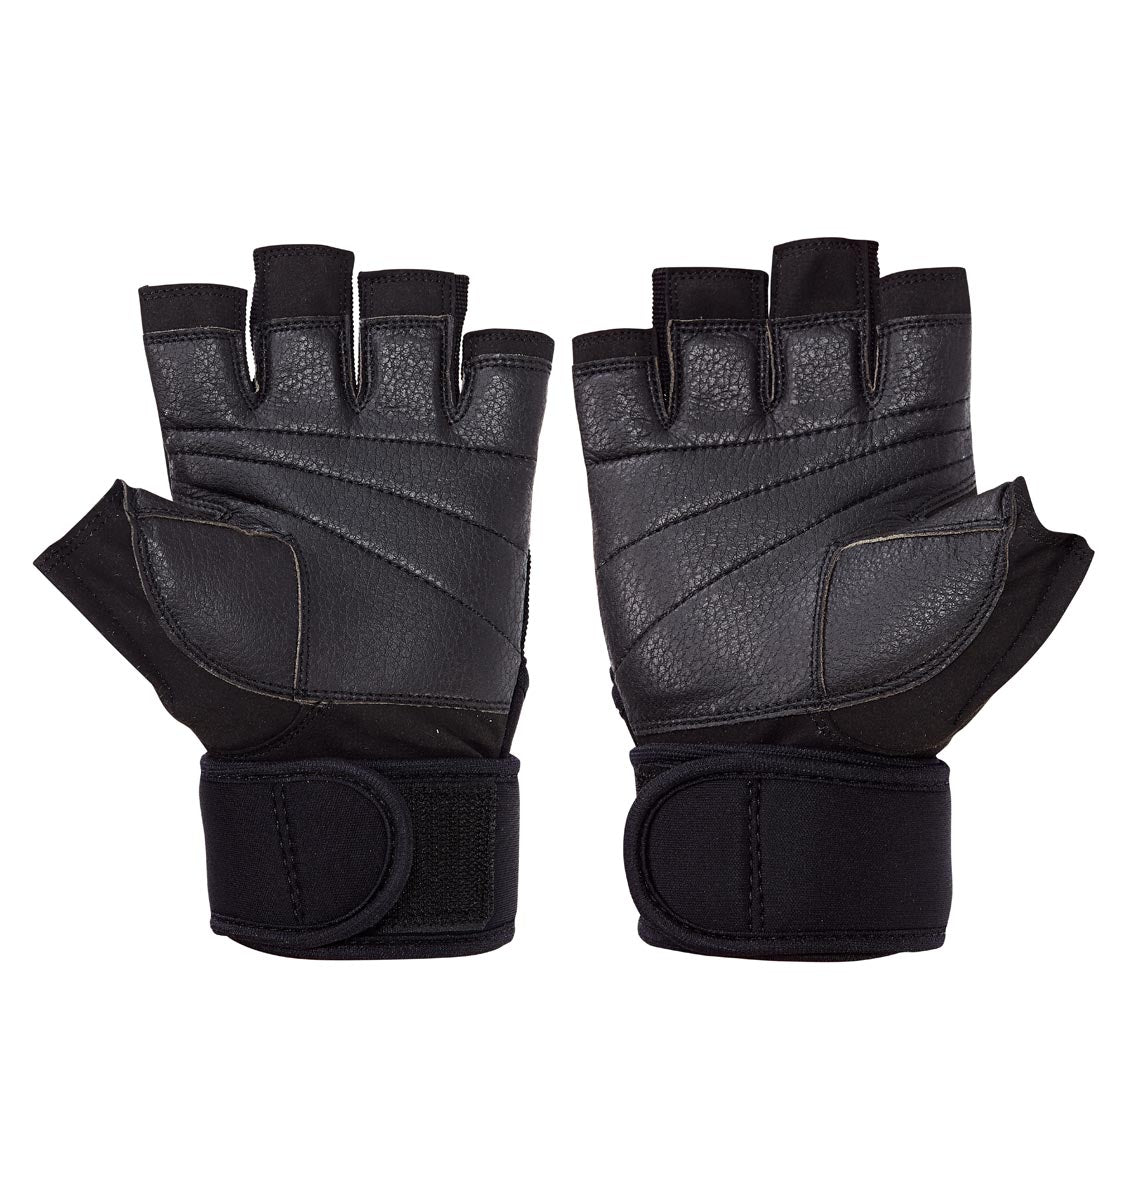 540 Schiek Platinum Series Lifting Gym Gloves with Wrist Wraps Pair Palm